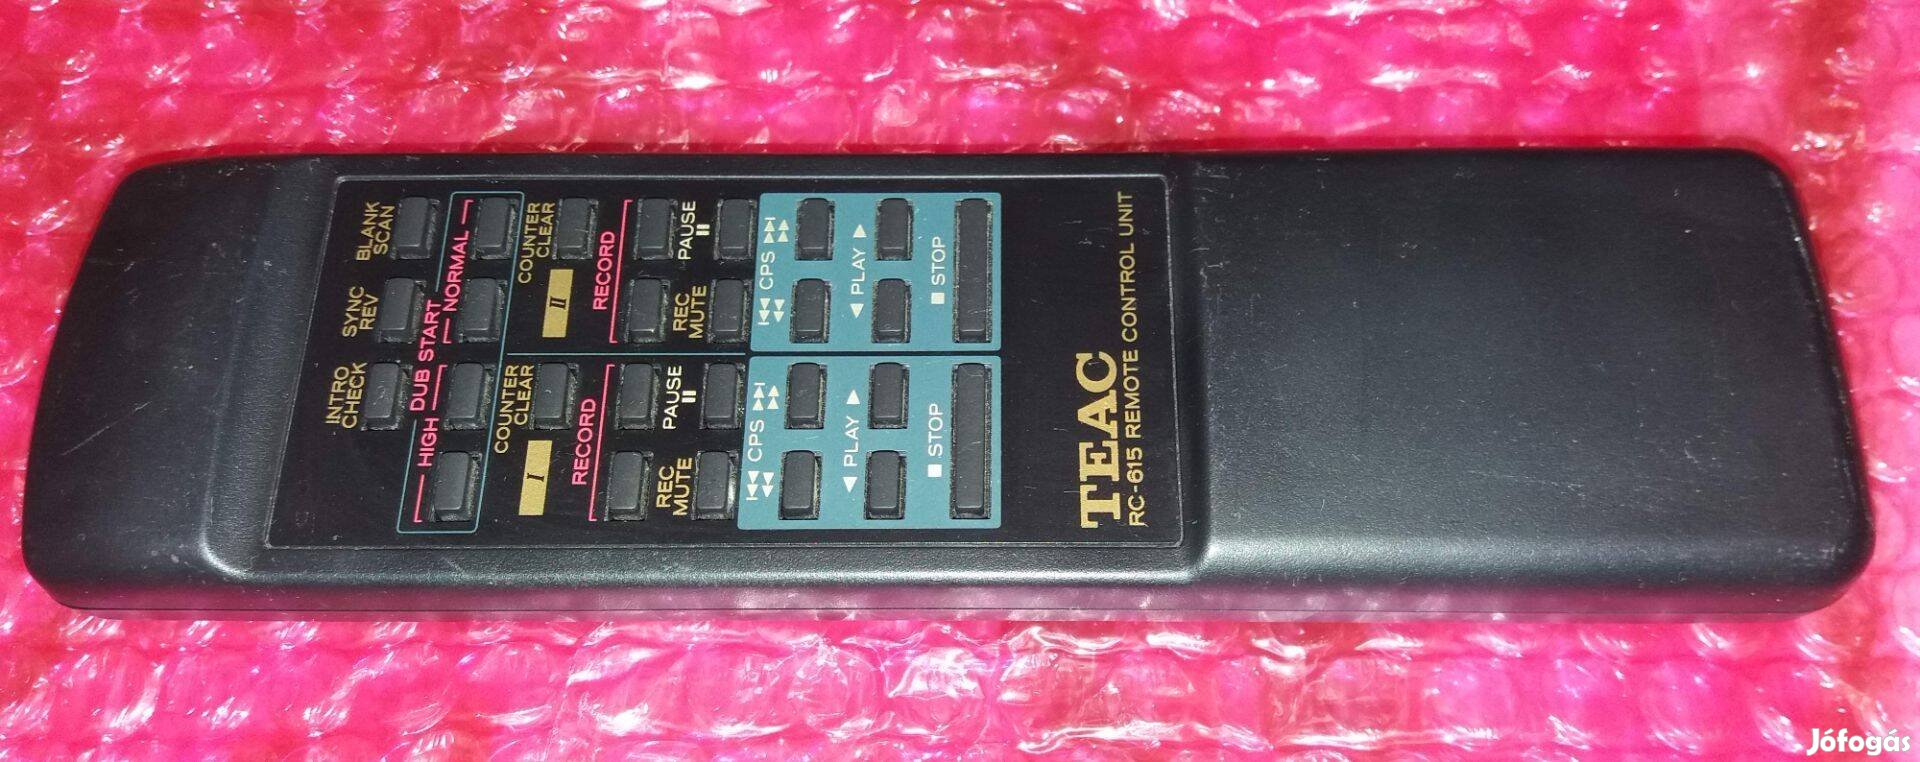 Teac RC-615 távirányító W-860R dupla kazettás deck hifi audio